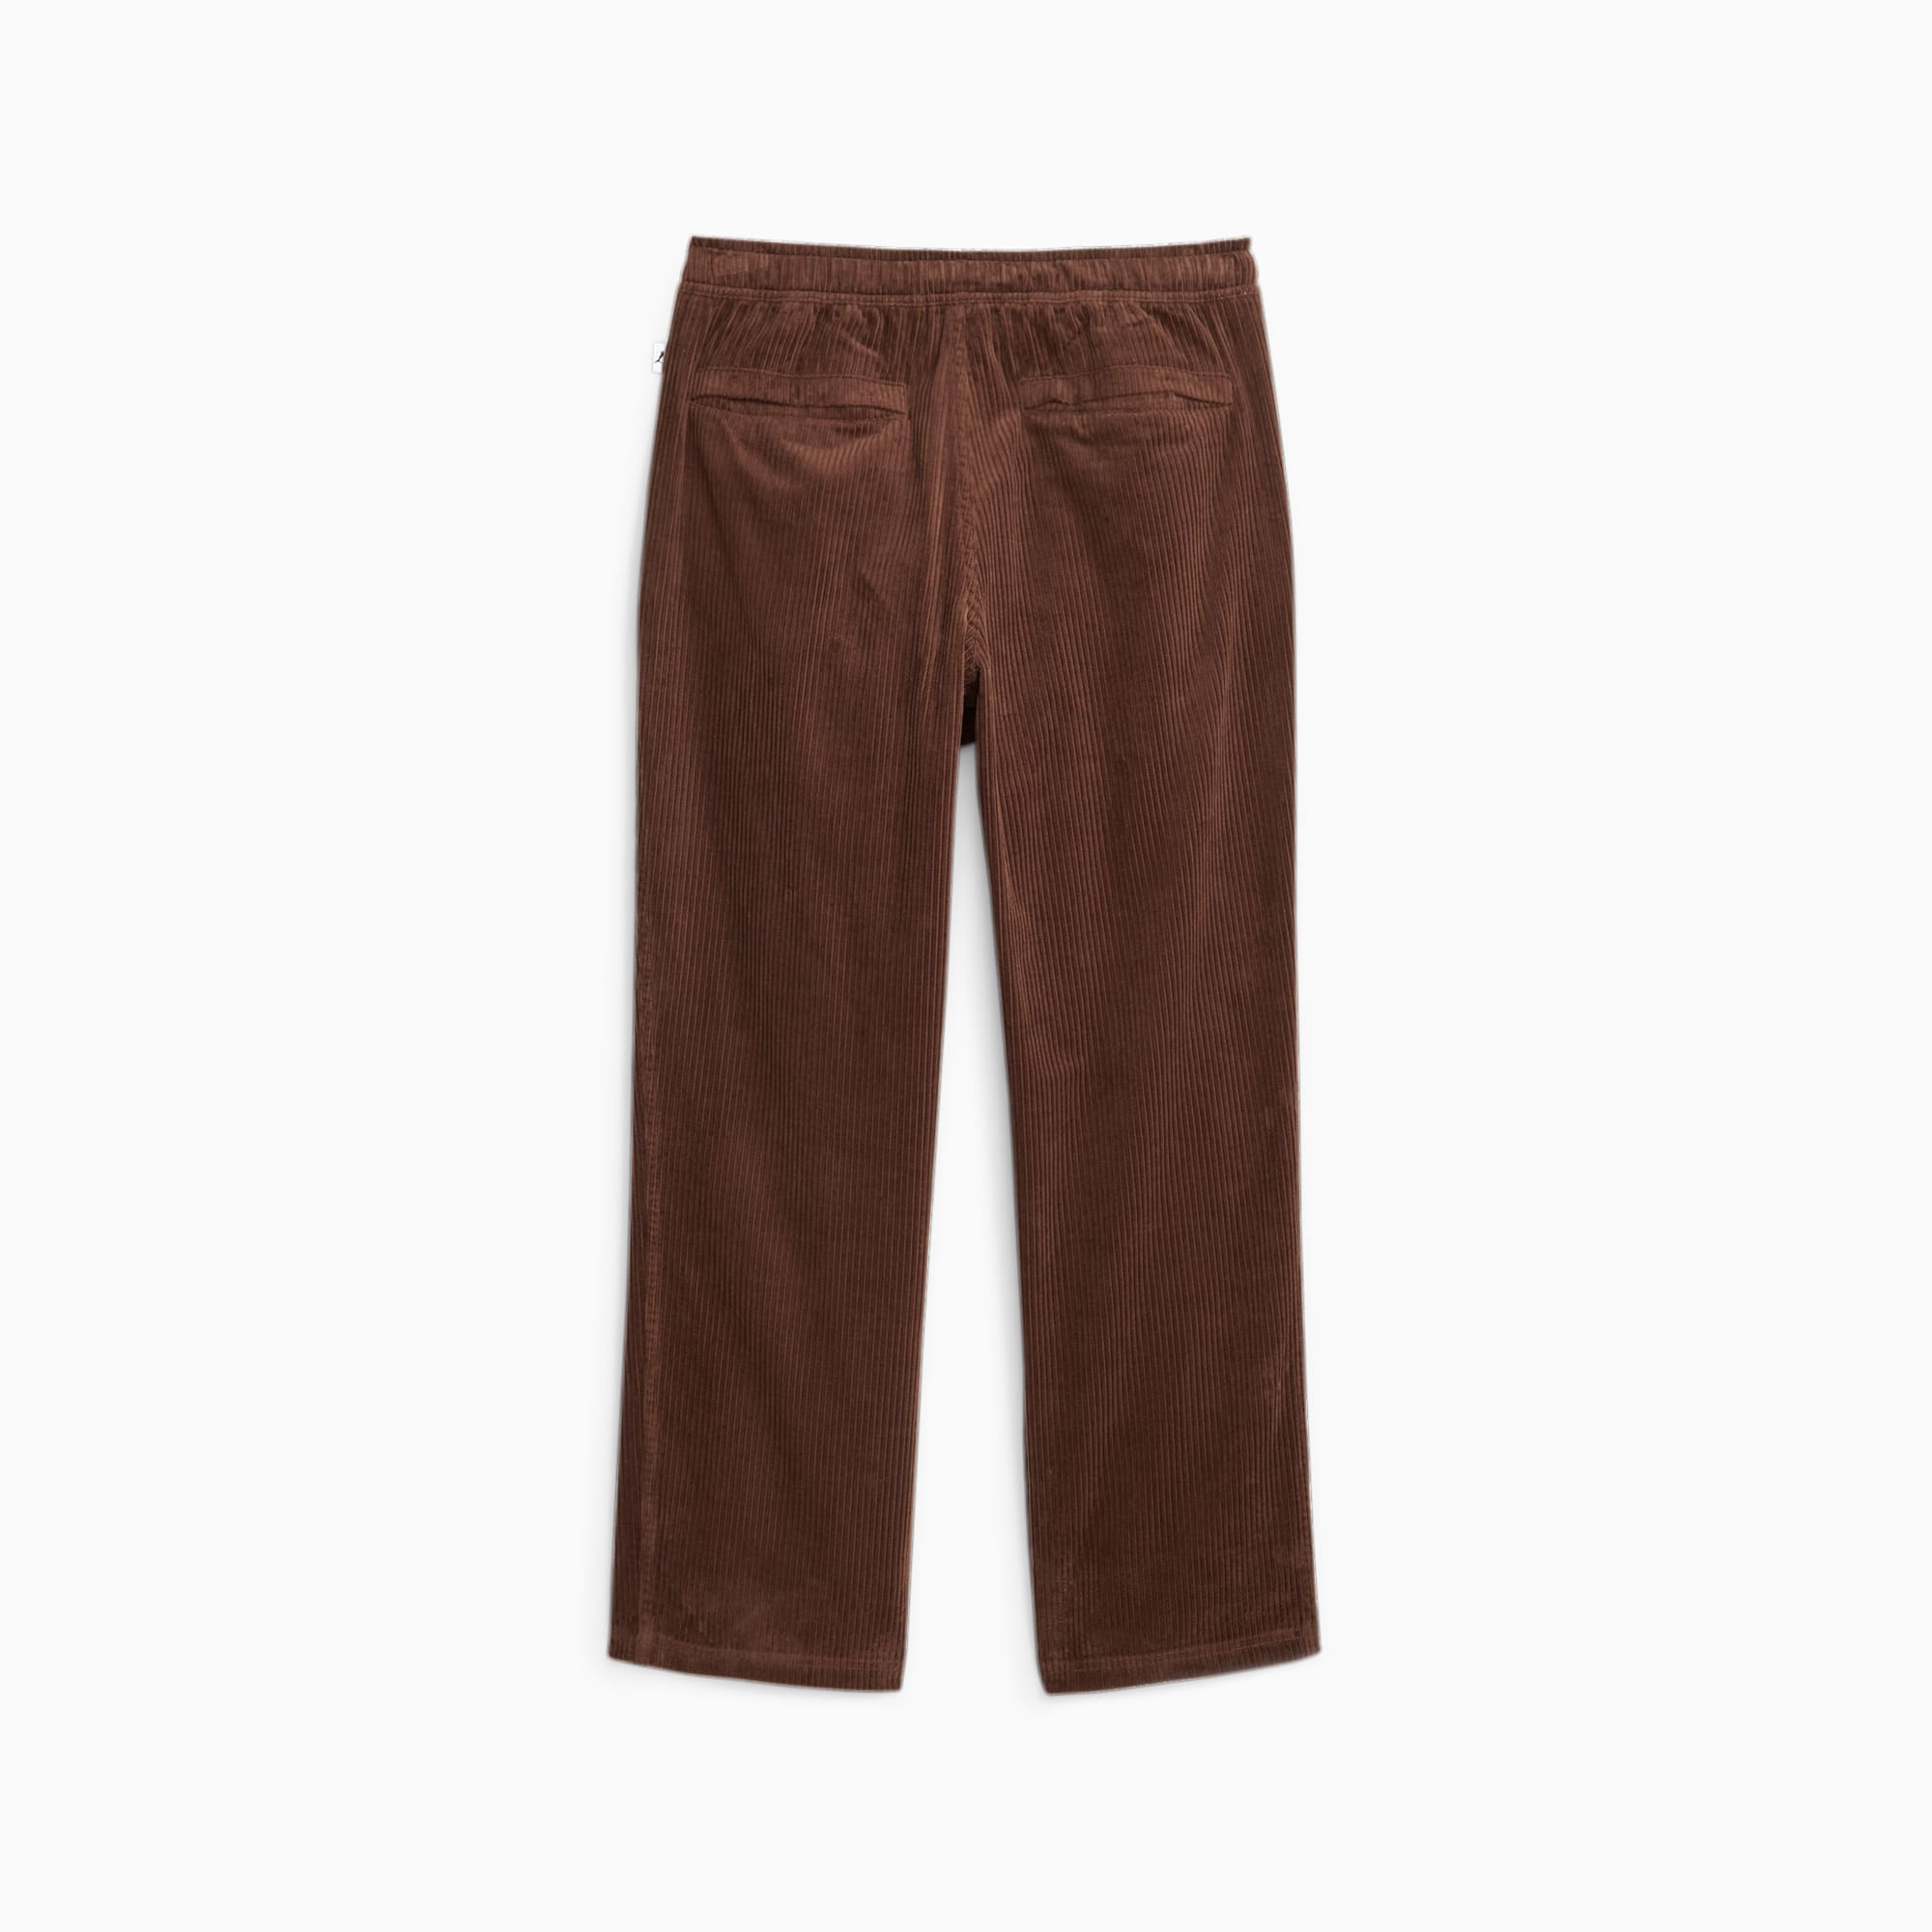 Men's PUMA Mmq Corduroy Pants, Chestnut Brown